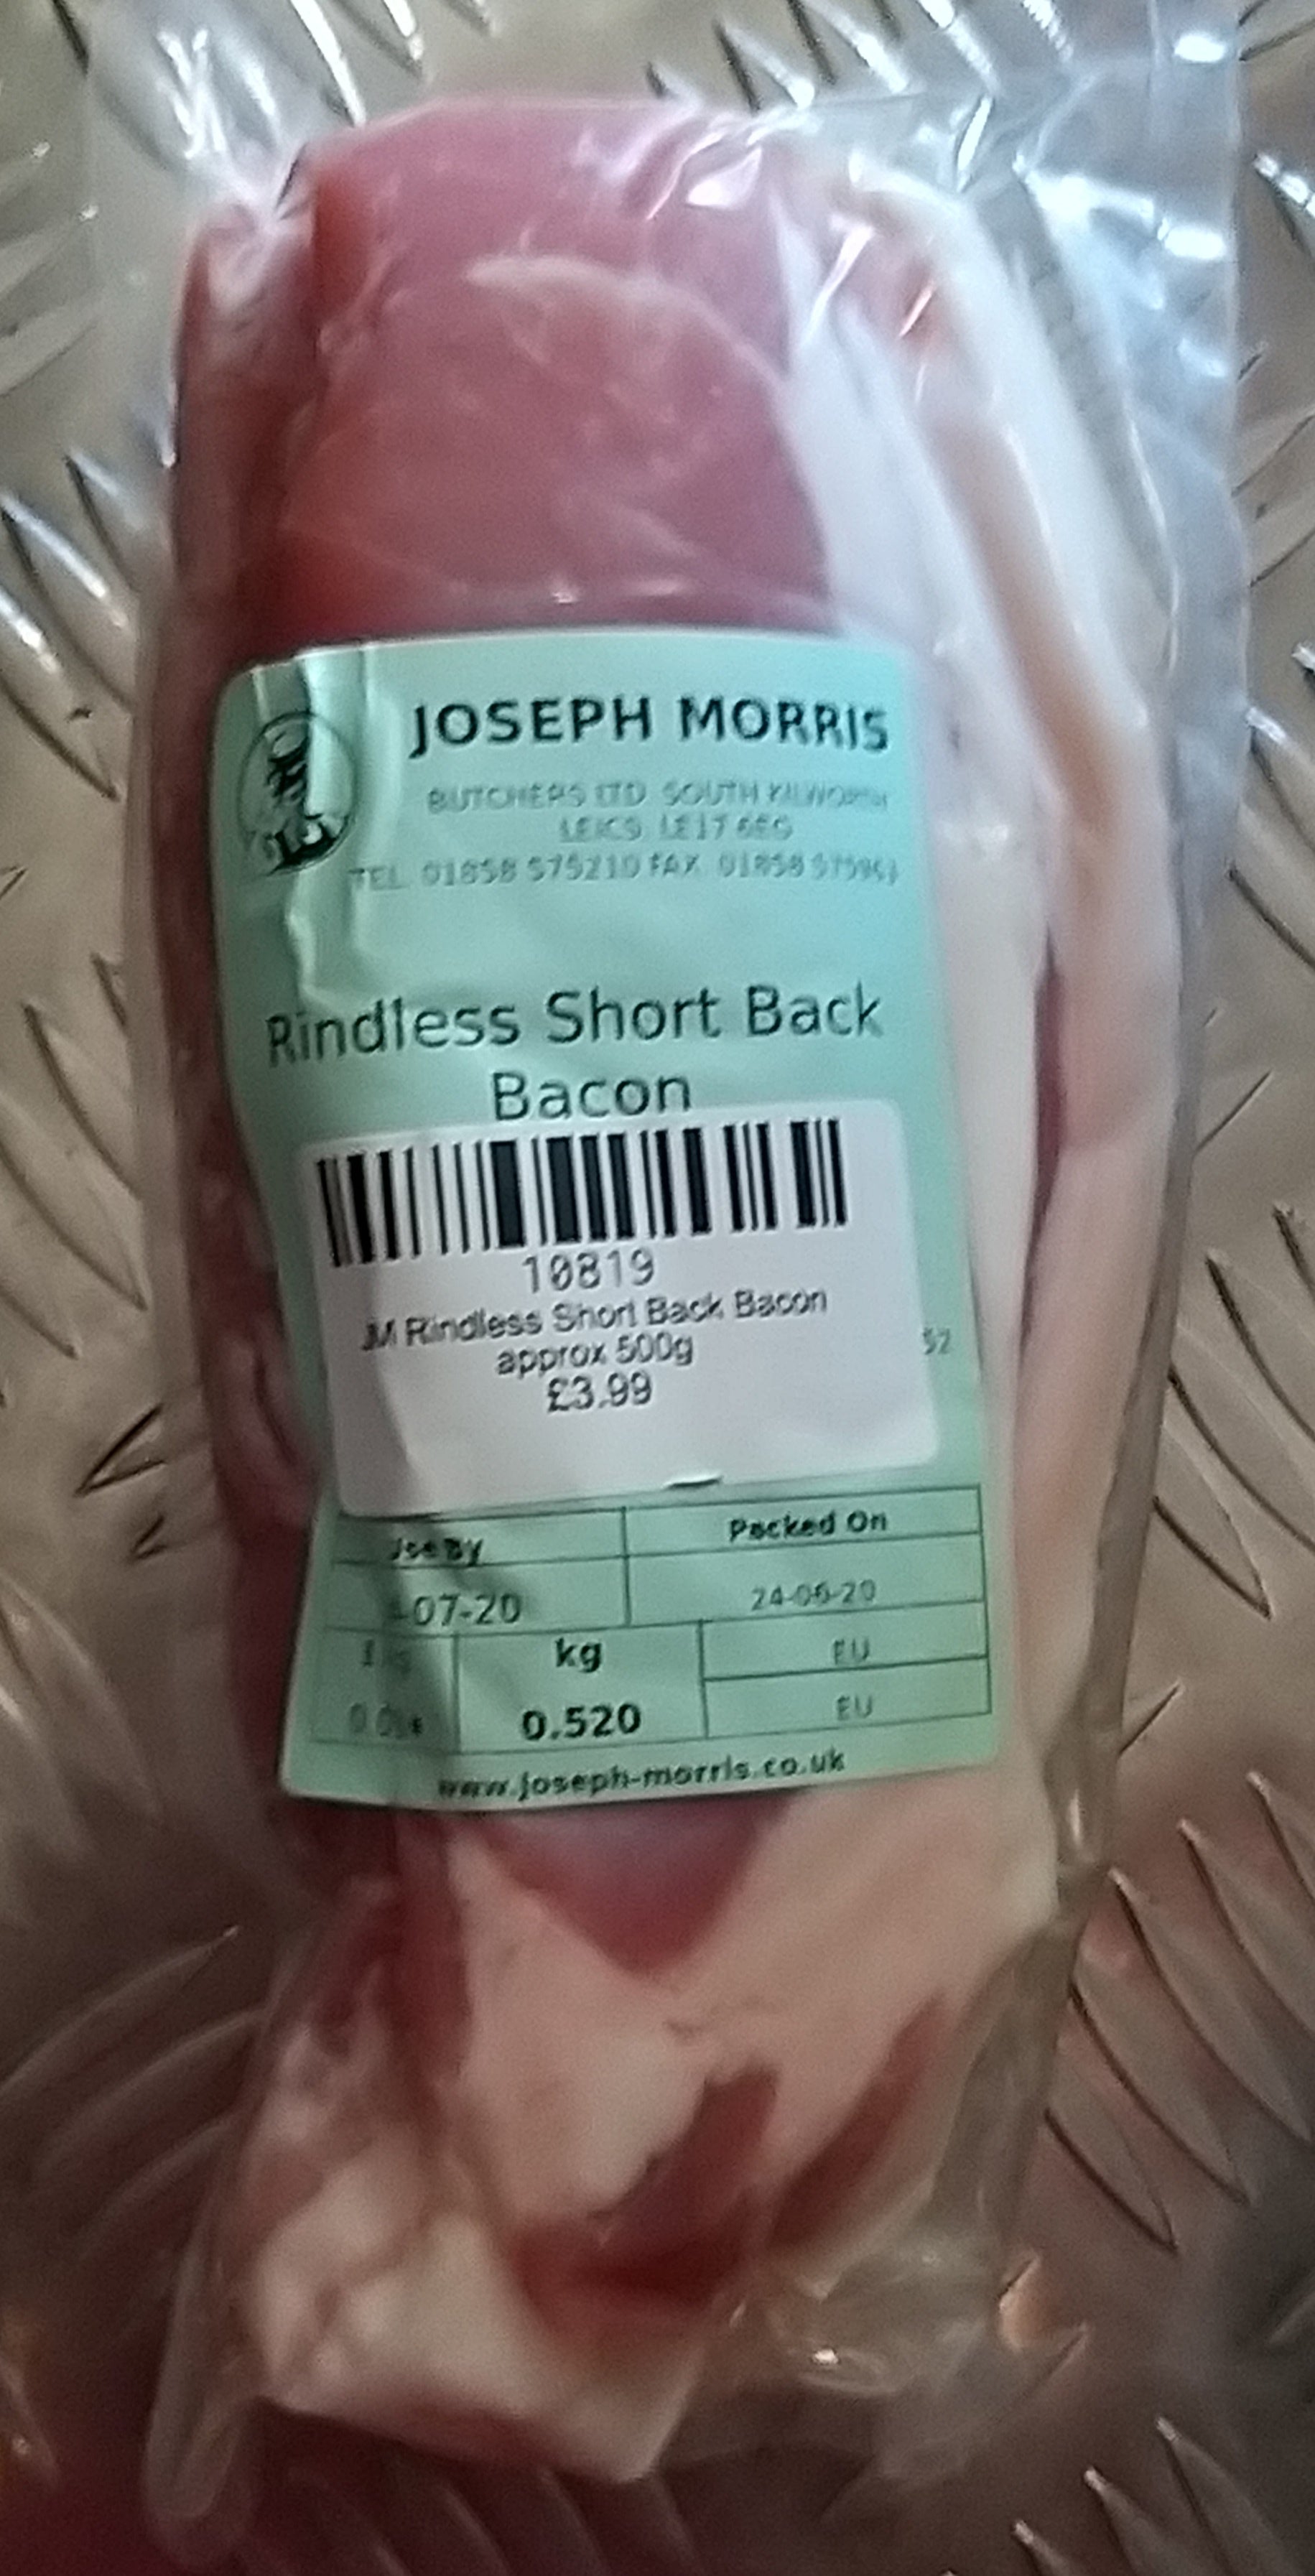 JM Rindless Short Back Bacon (price per kg)